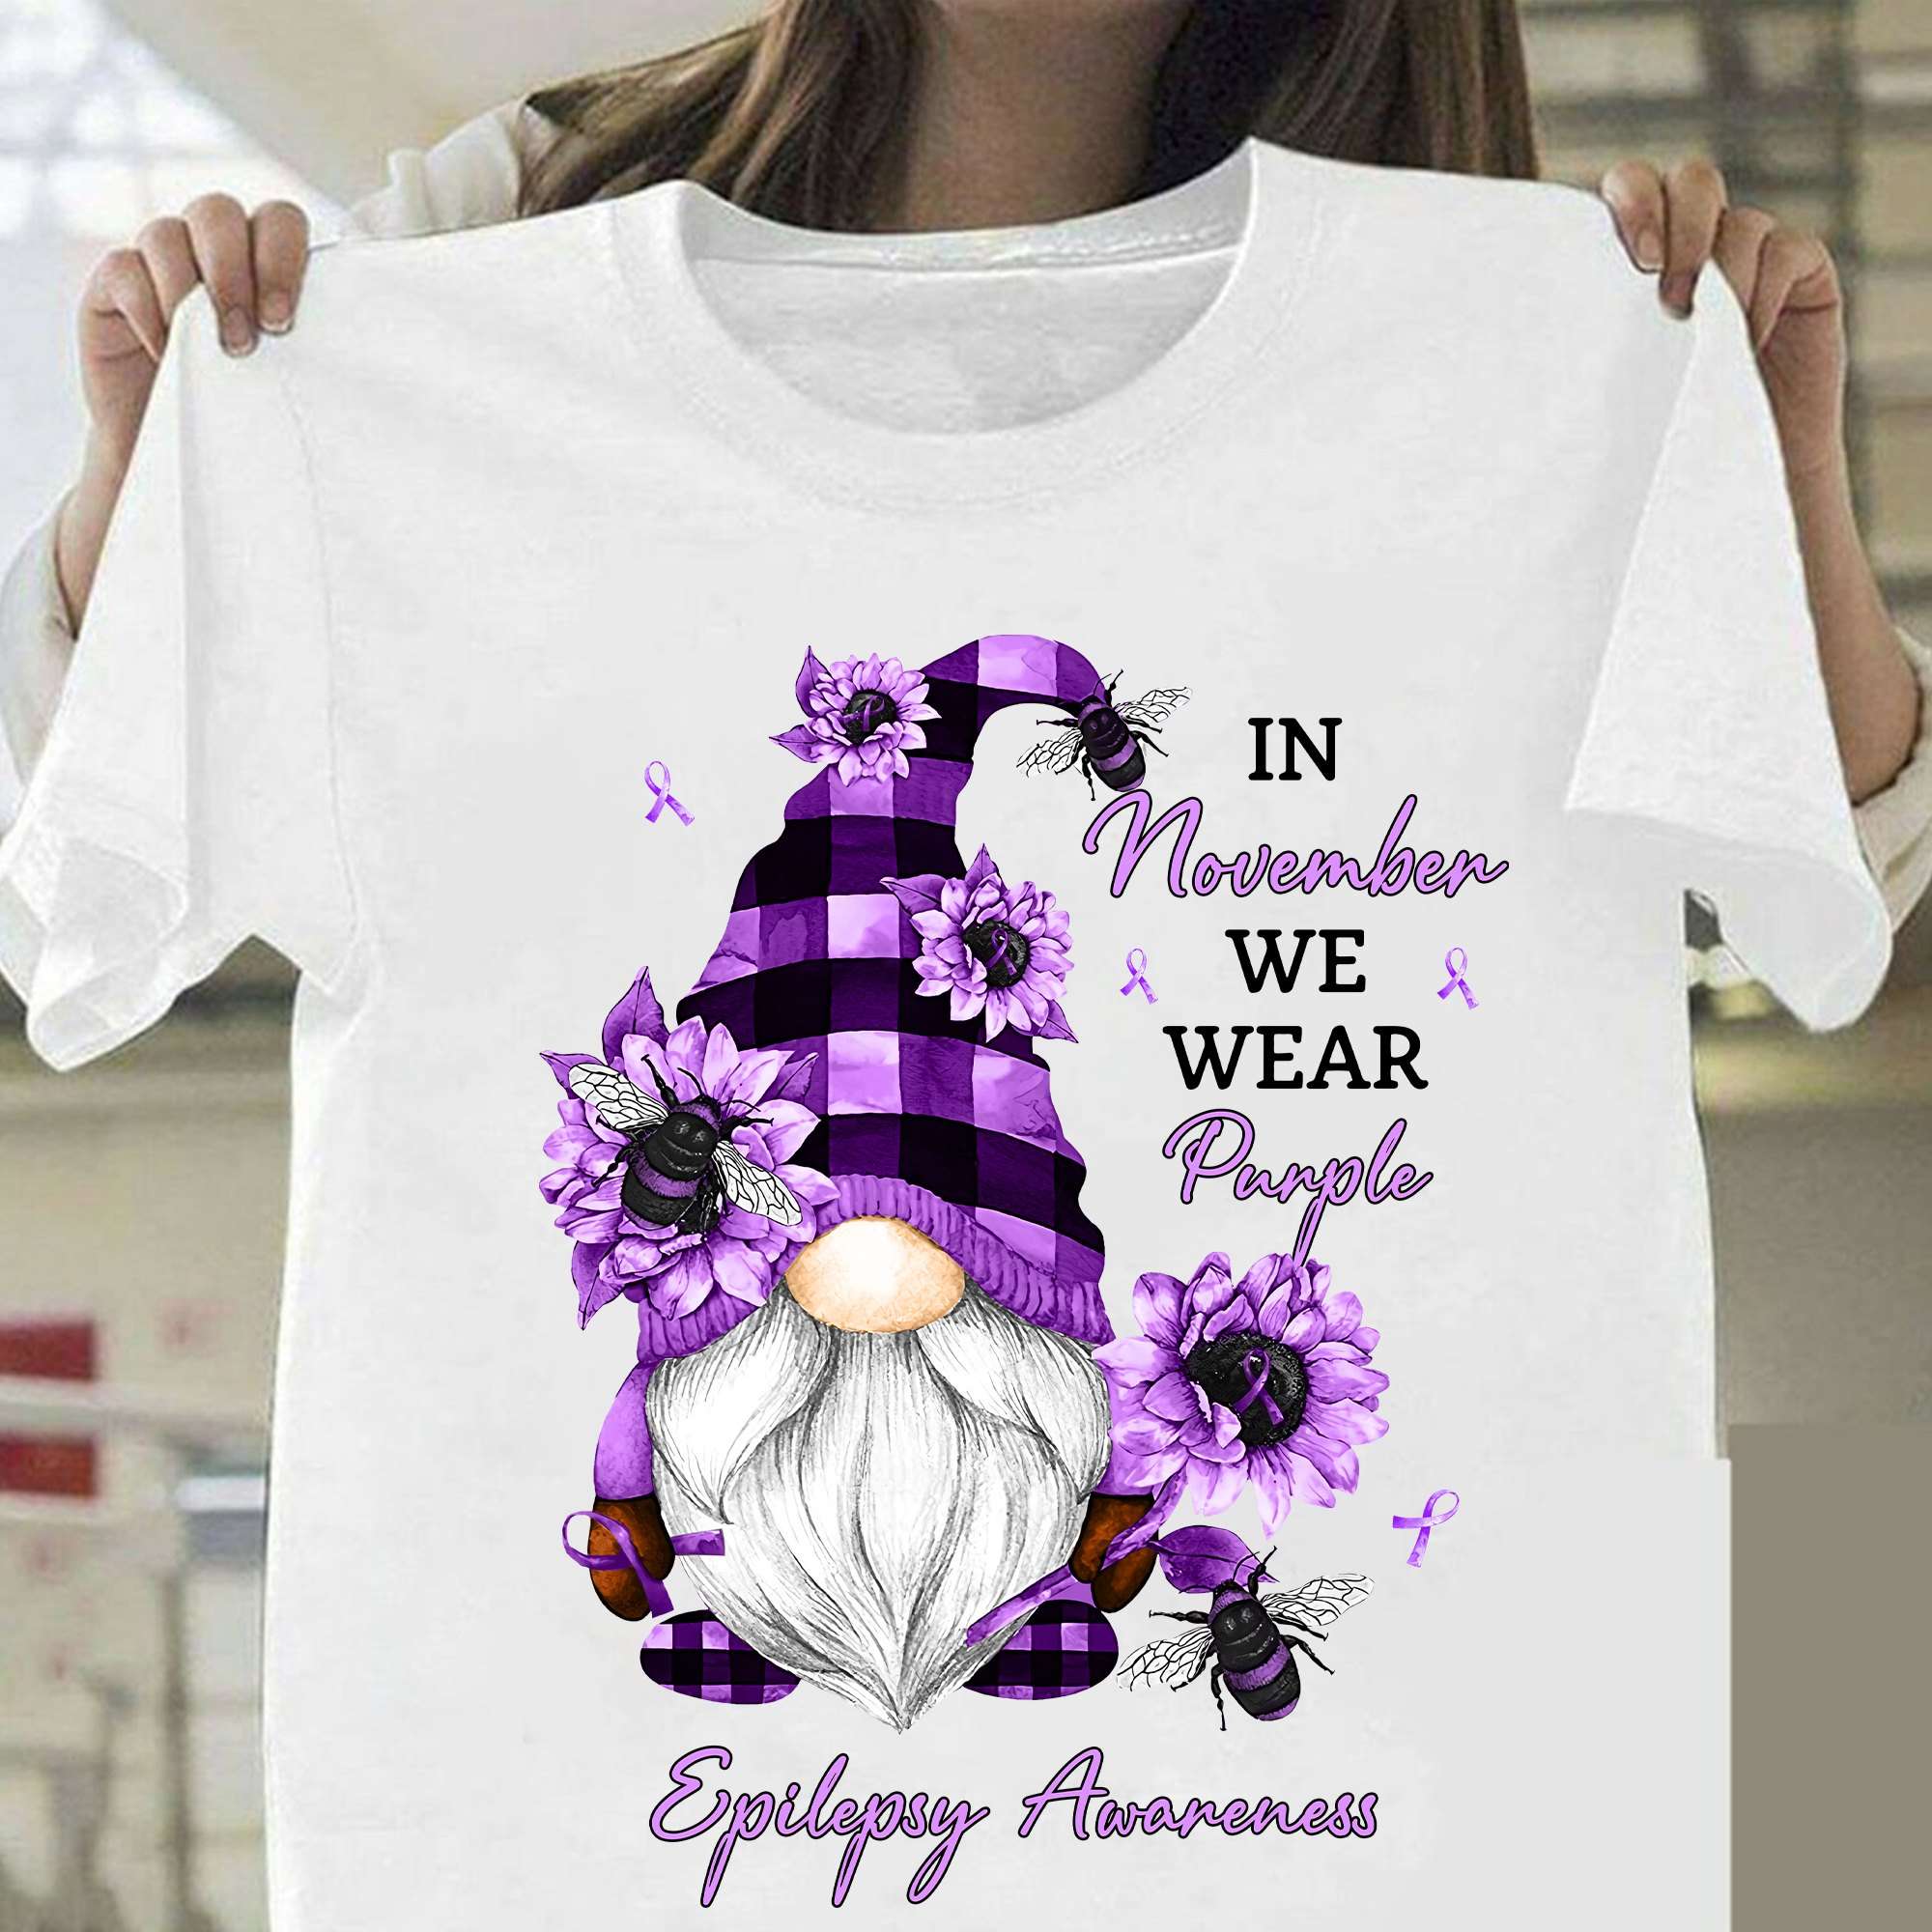 Epilepsy Gnomes - In november we wear purple epilepsy awareness